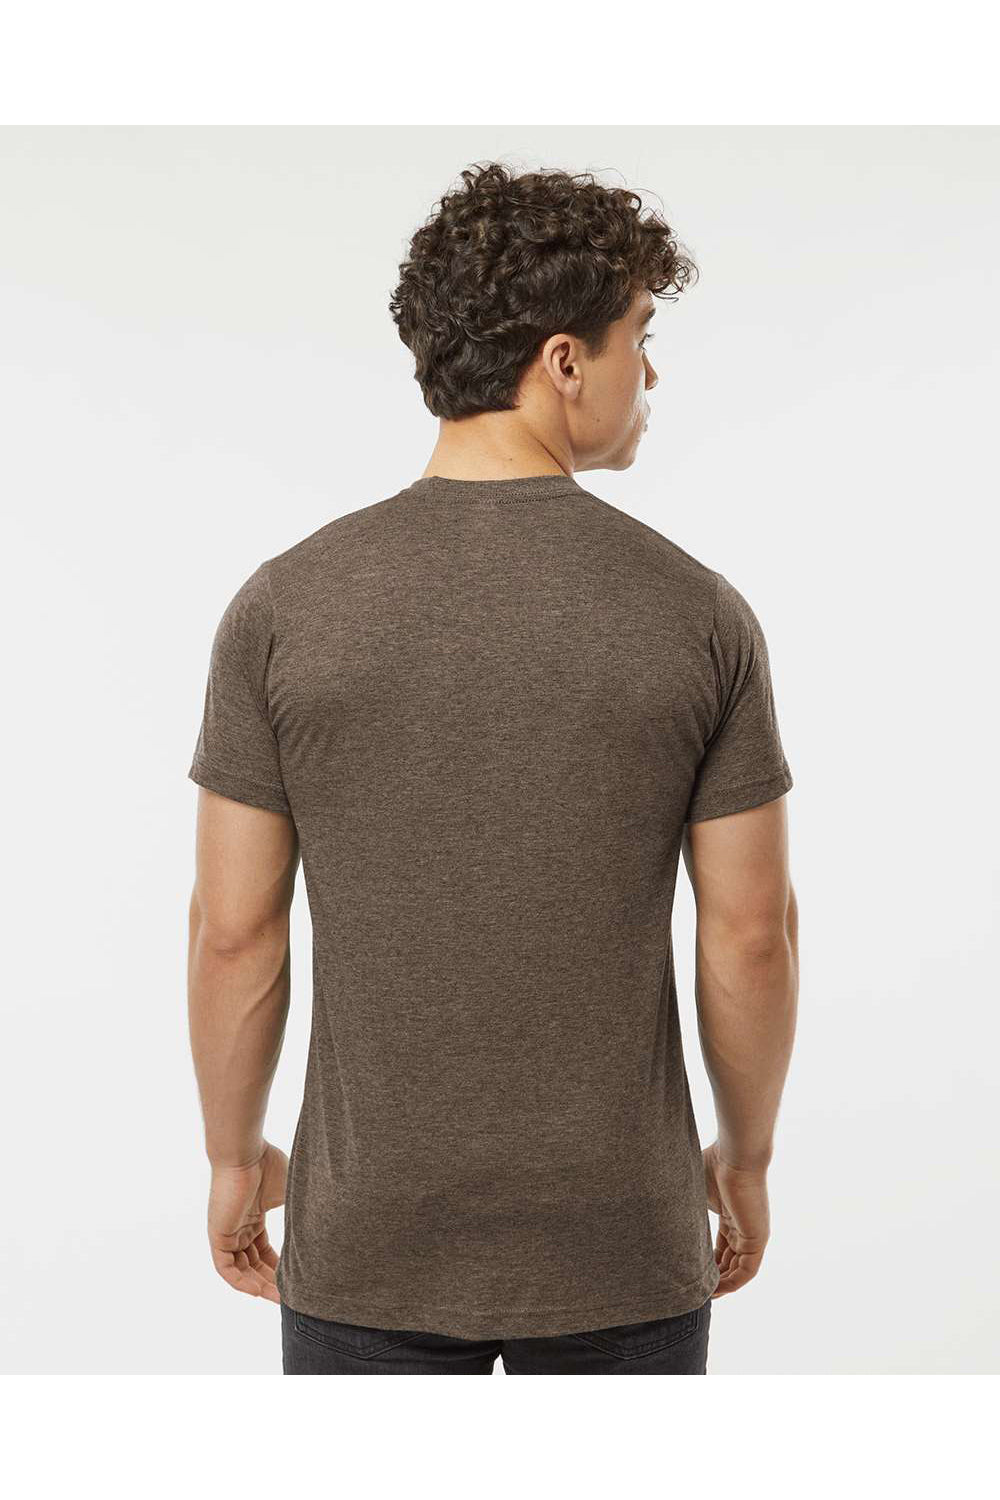 Tultex 241 Mens Poly-Rich Short Sleeve Crewneck T-Shirt Heather Brown Model Back